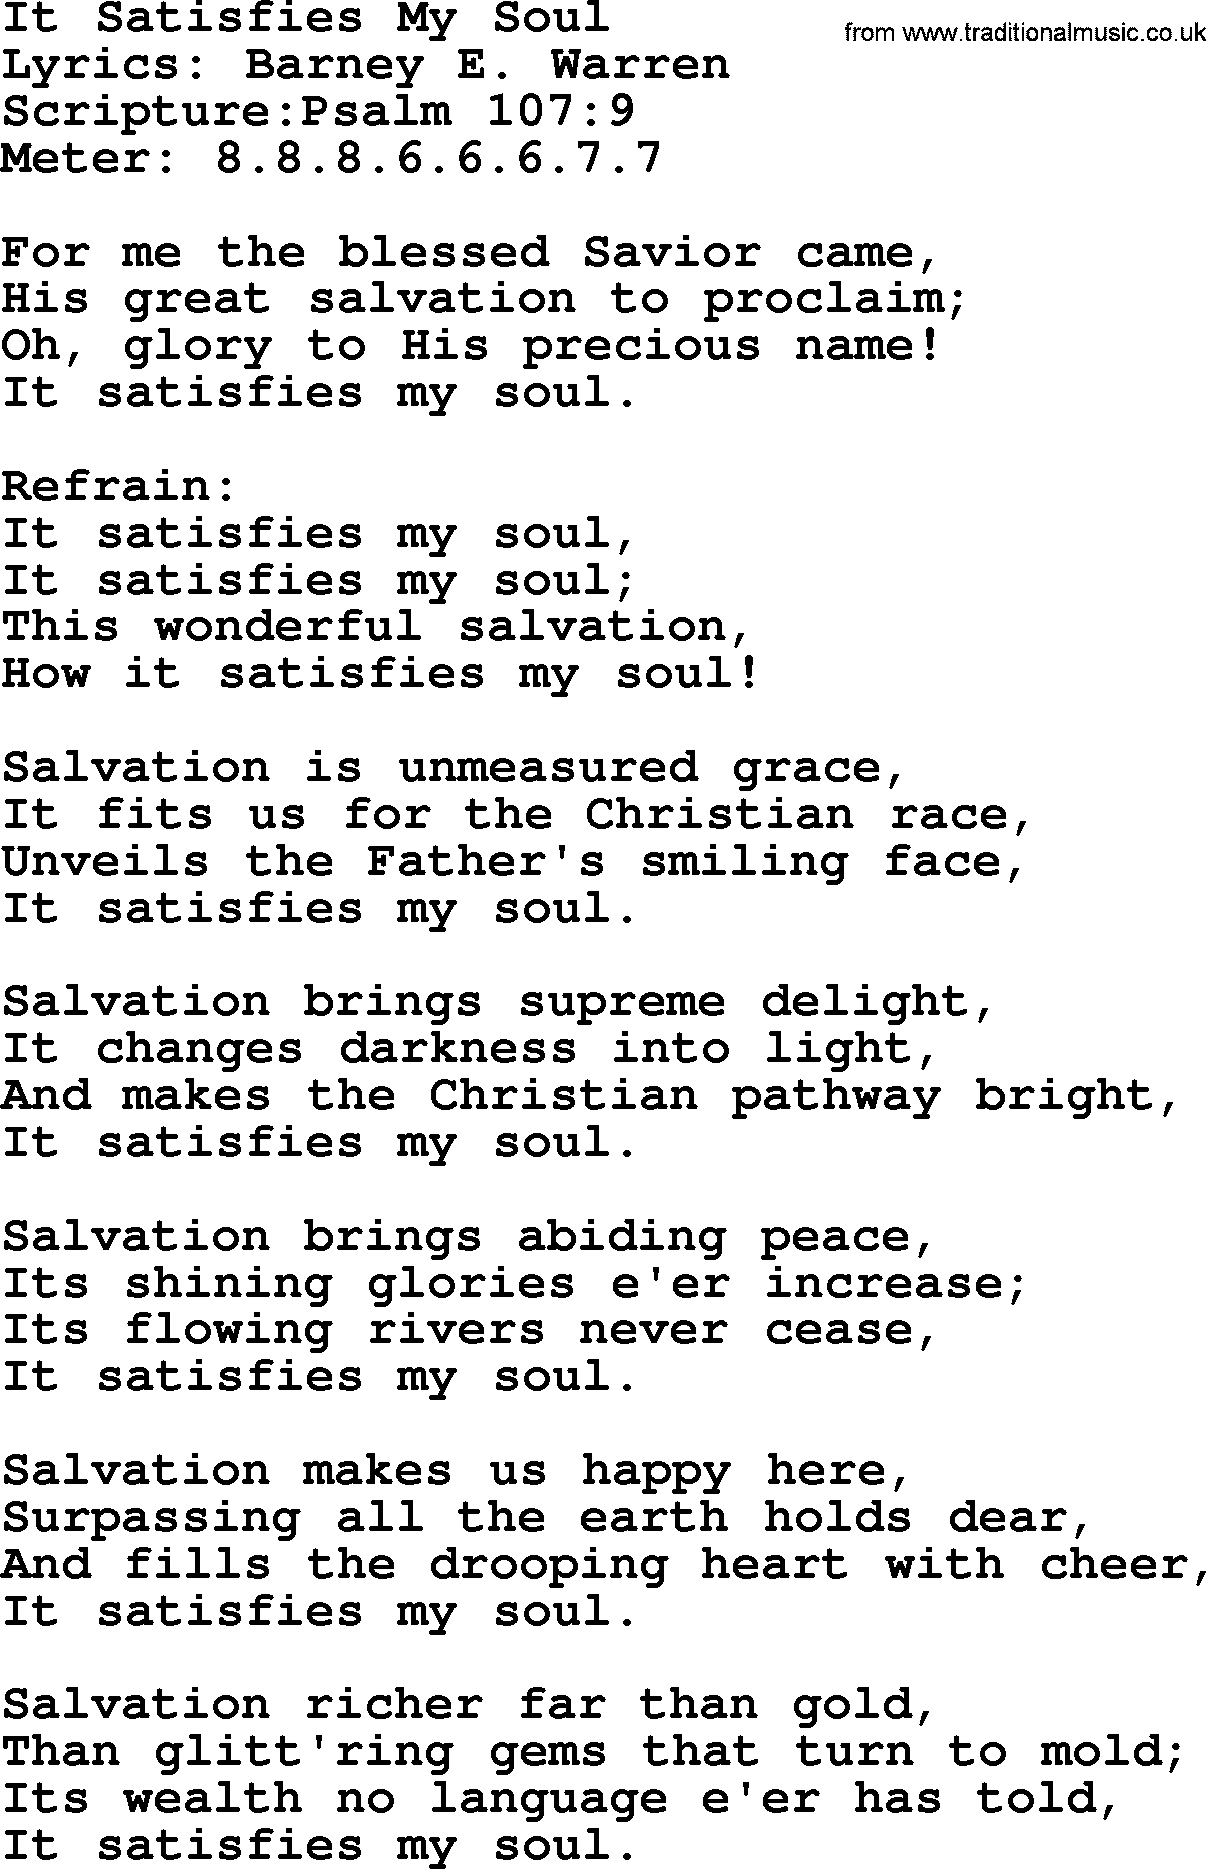 Hymns about  Angels, Hymn: It Satisfies My Soul, lyrics, sheet music, midi & Mp3 music with PDF